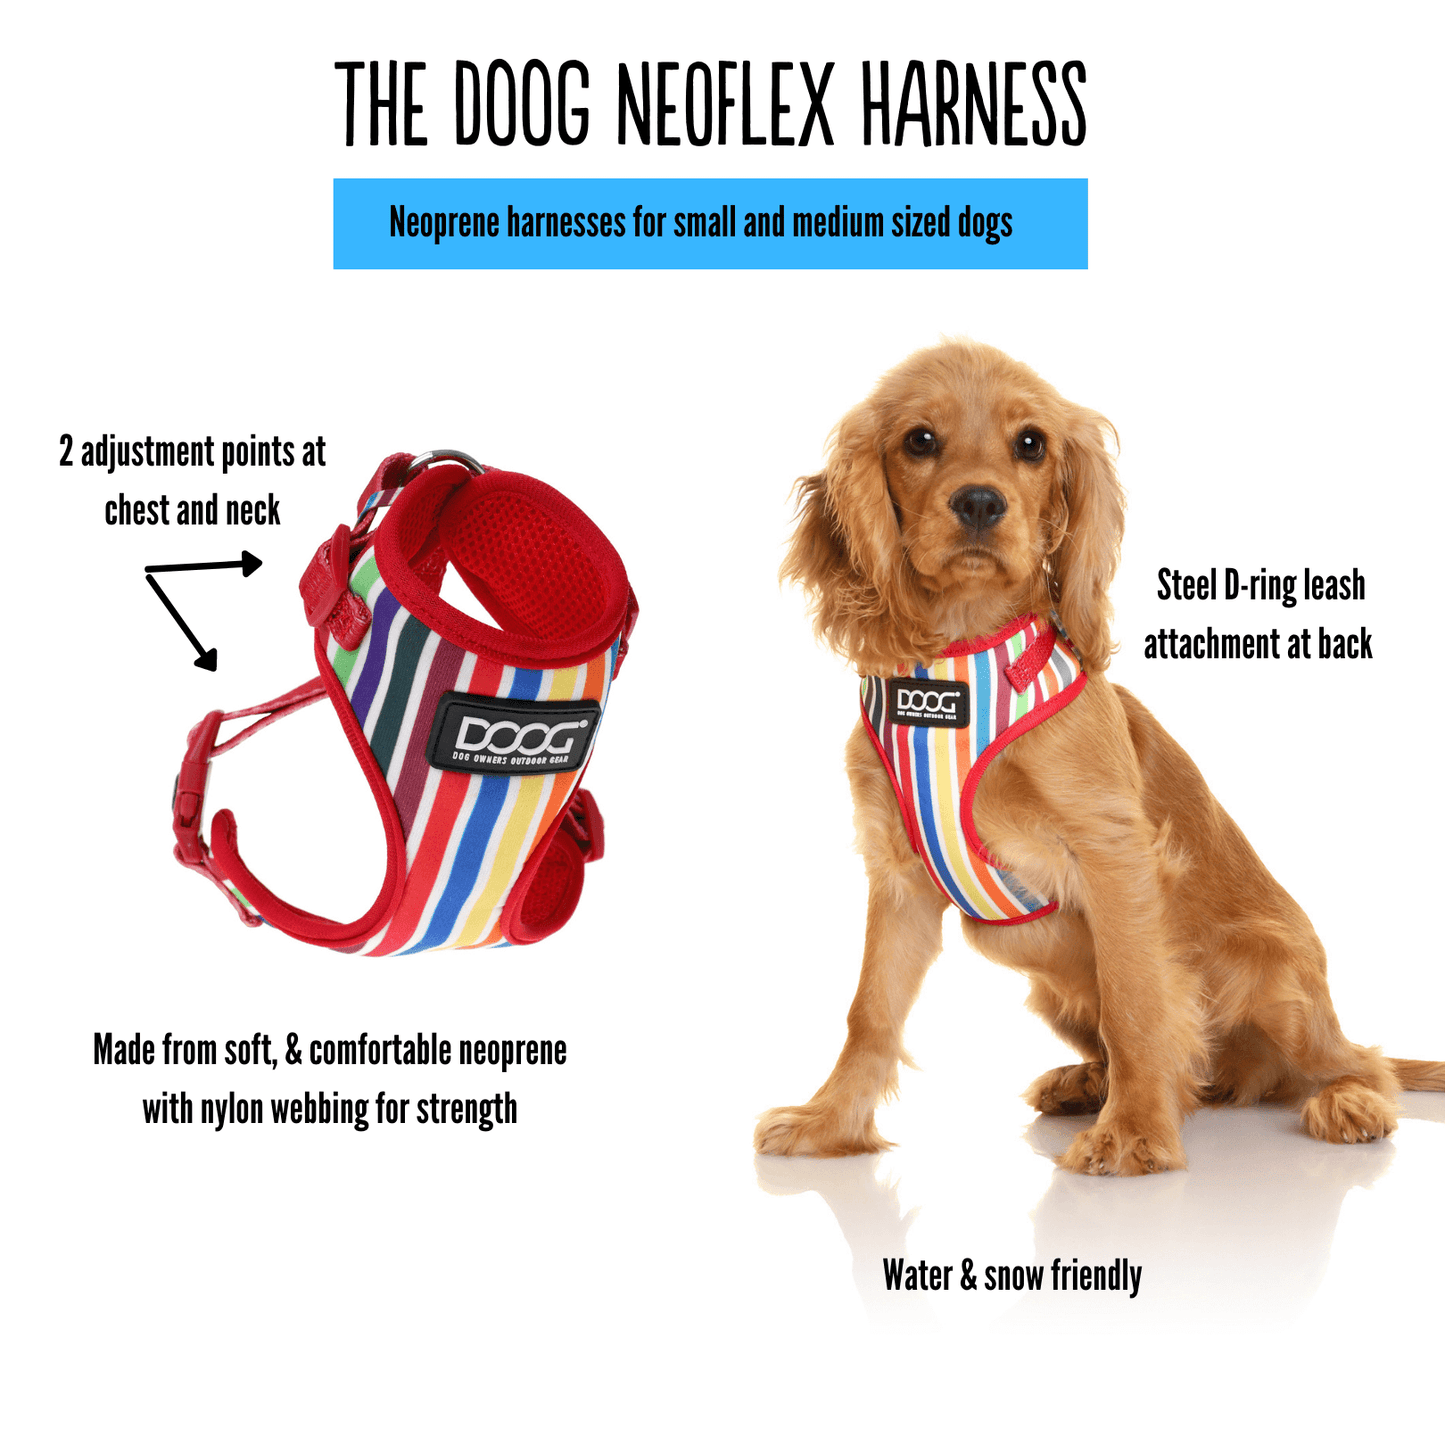 DOOG Neoflex Dog Harness Benji